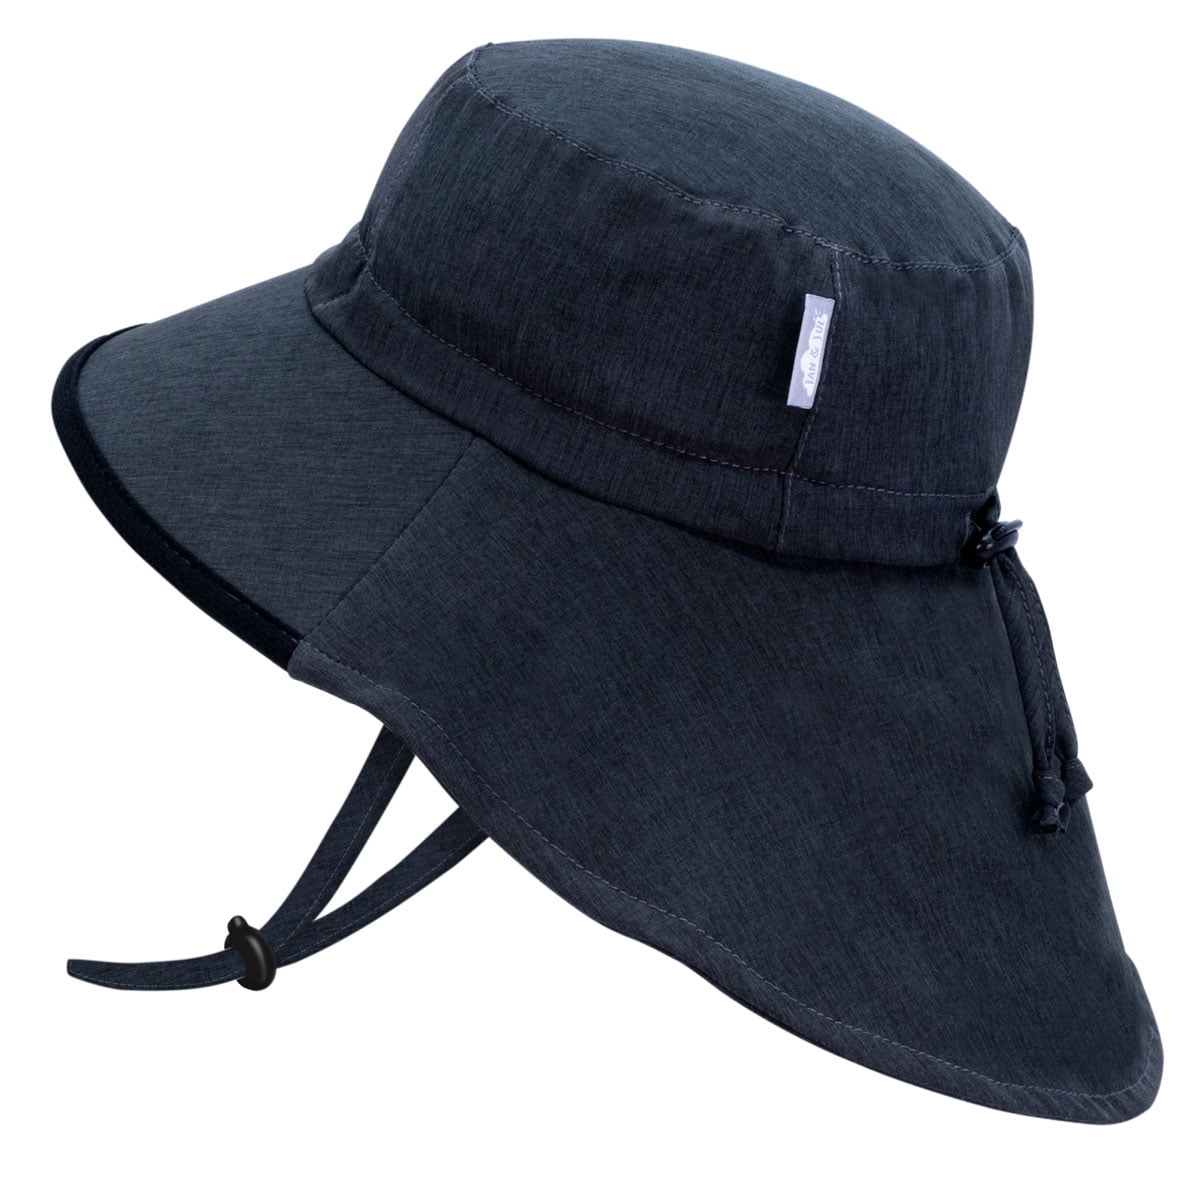 Jan & Jul Boys Sun-Hats for Big Kids, Packable Aqua-Dry Adventure